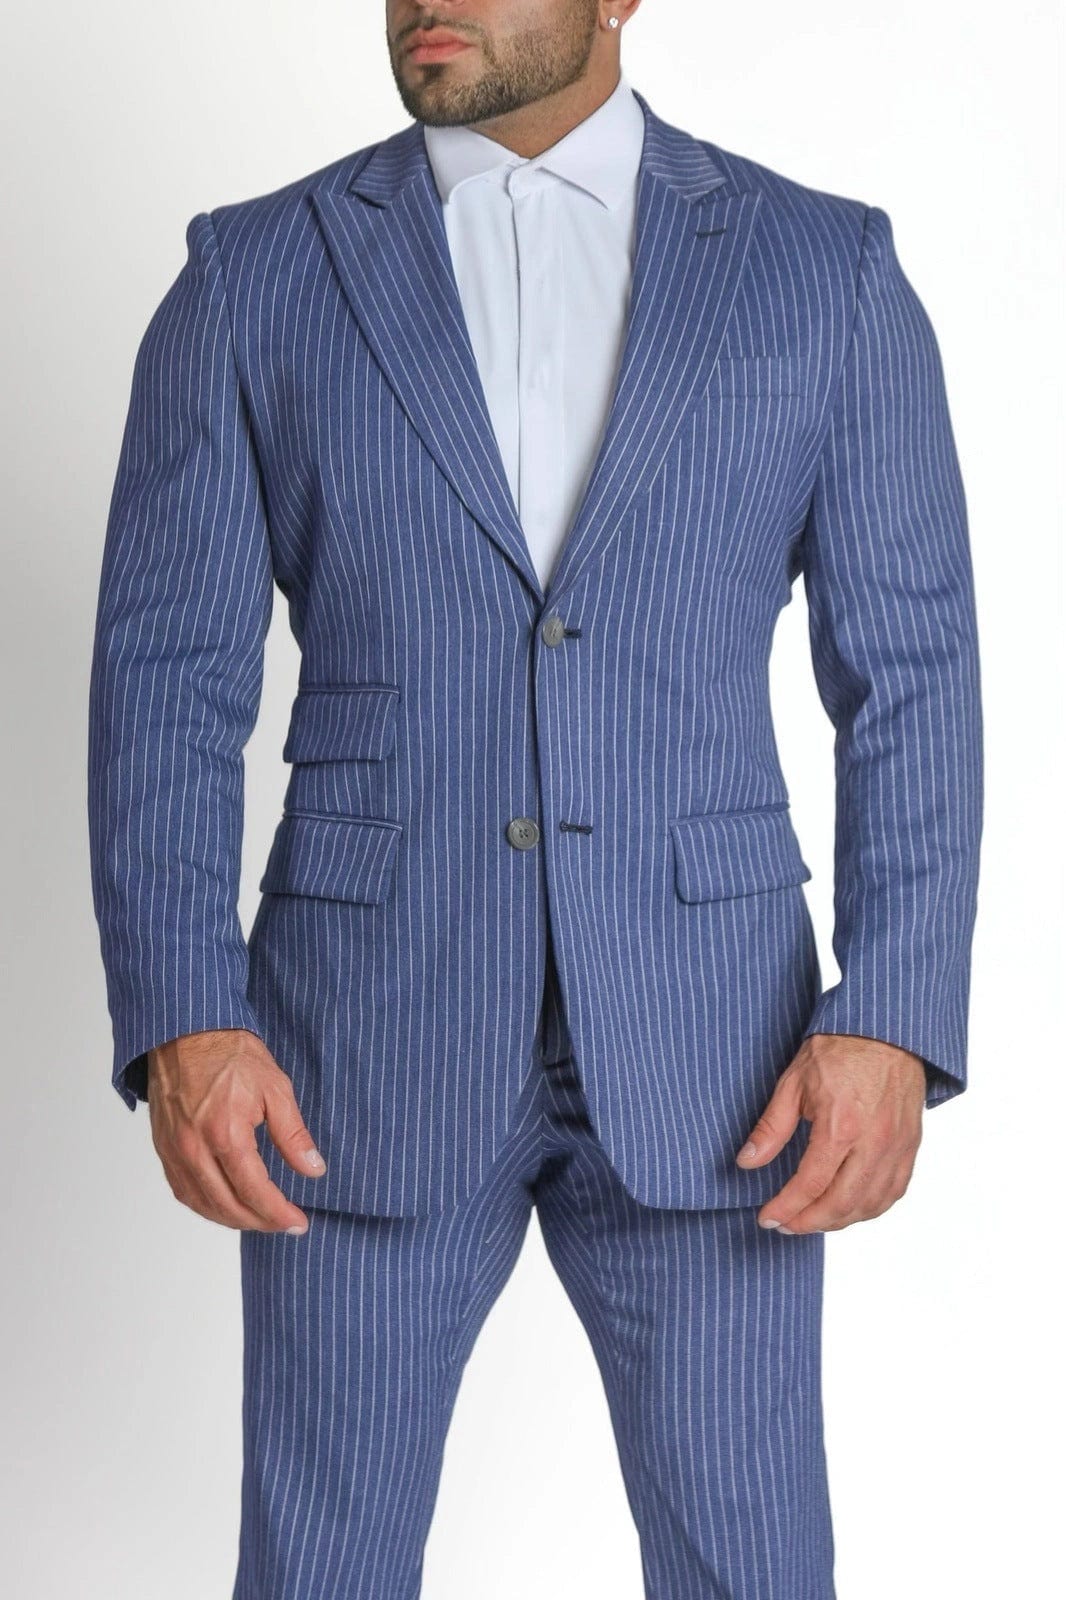 When Should A Man Buy A Pinstripe Suit?